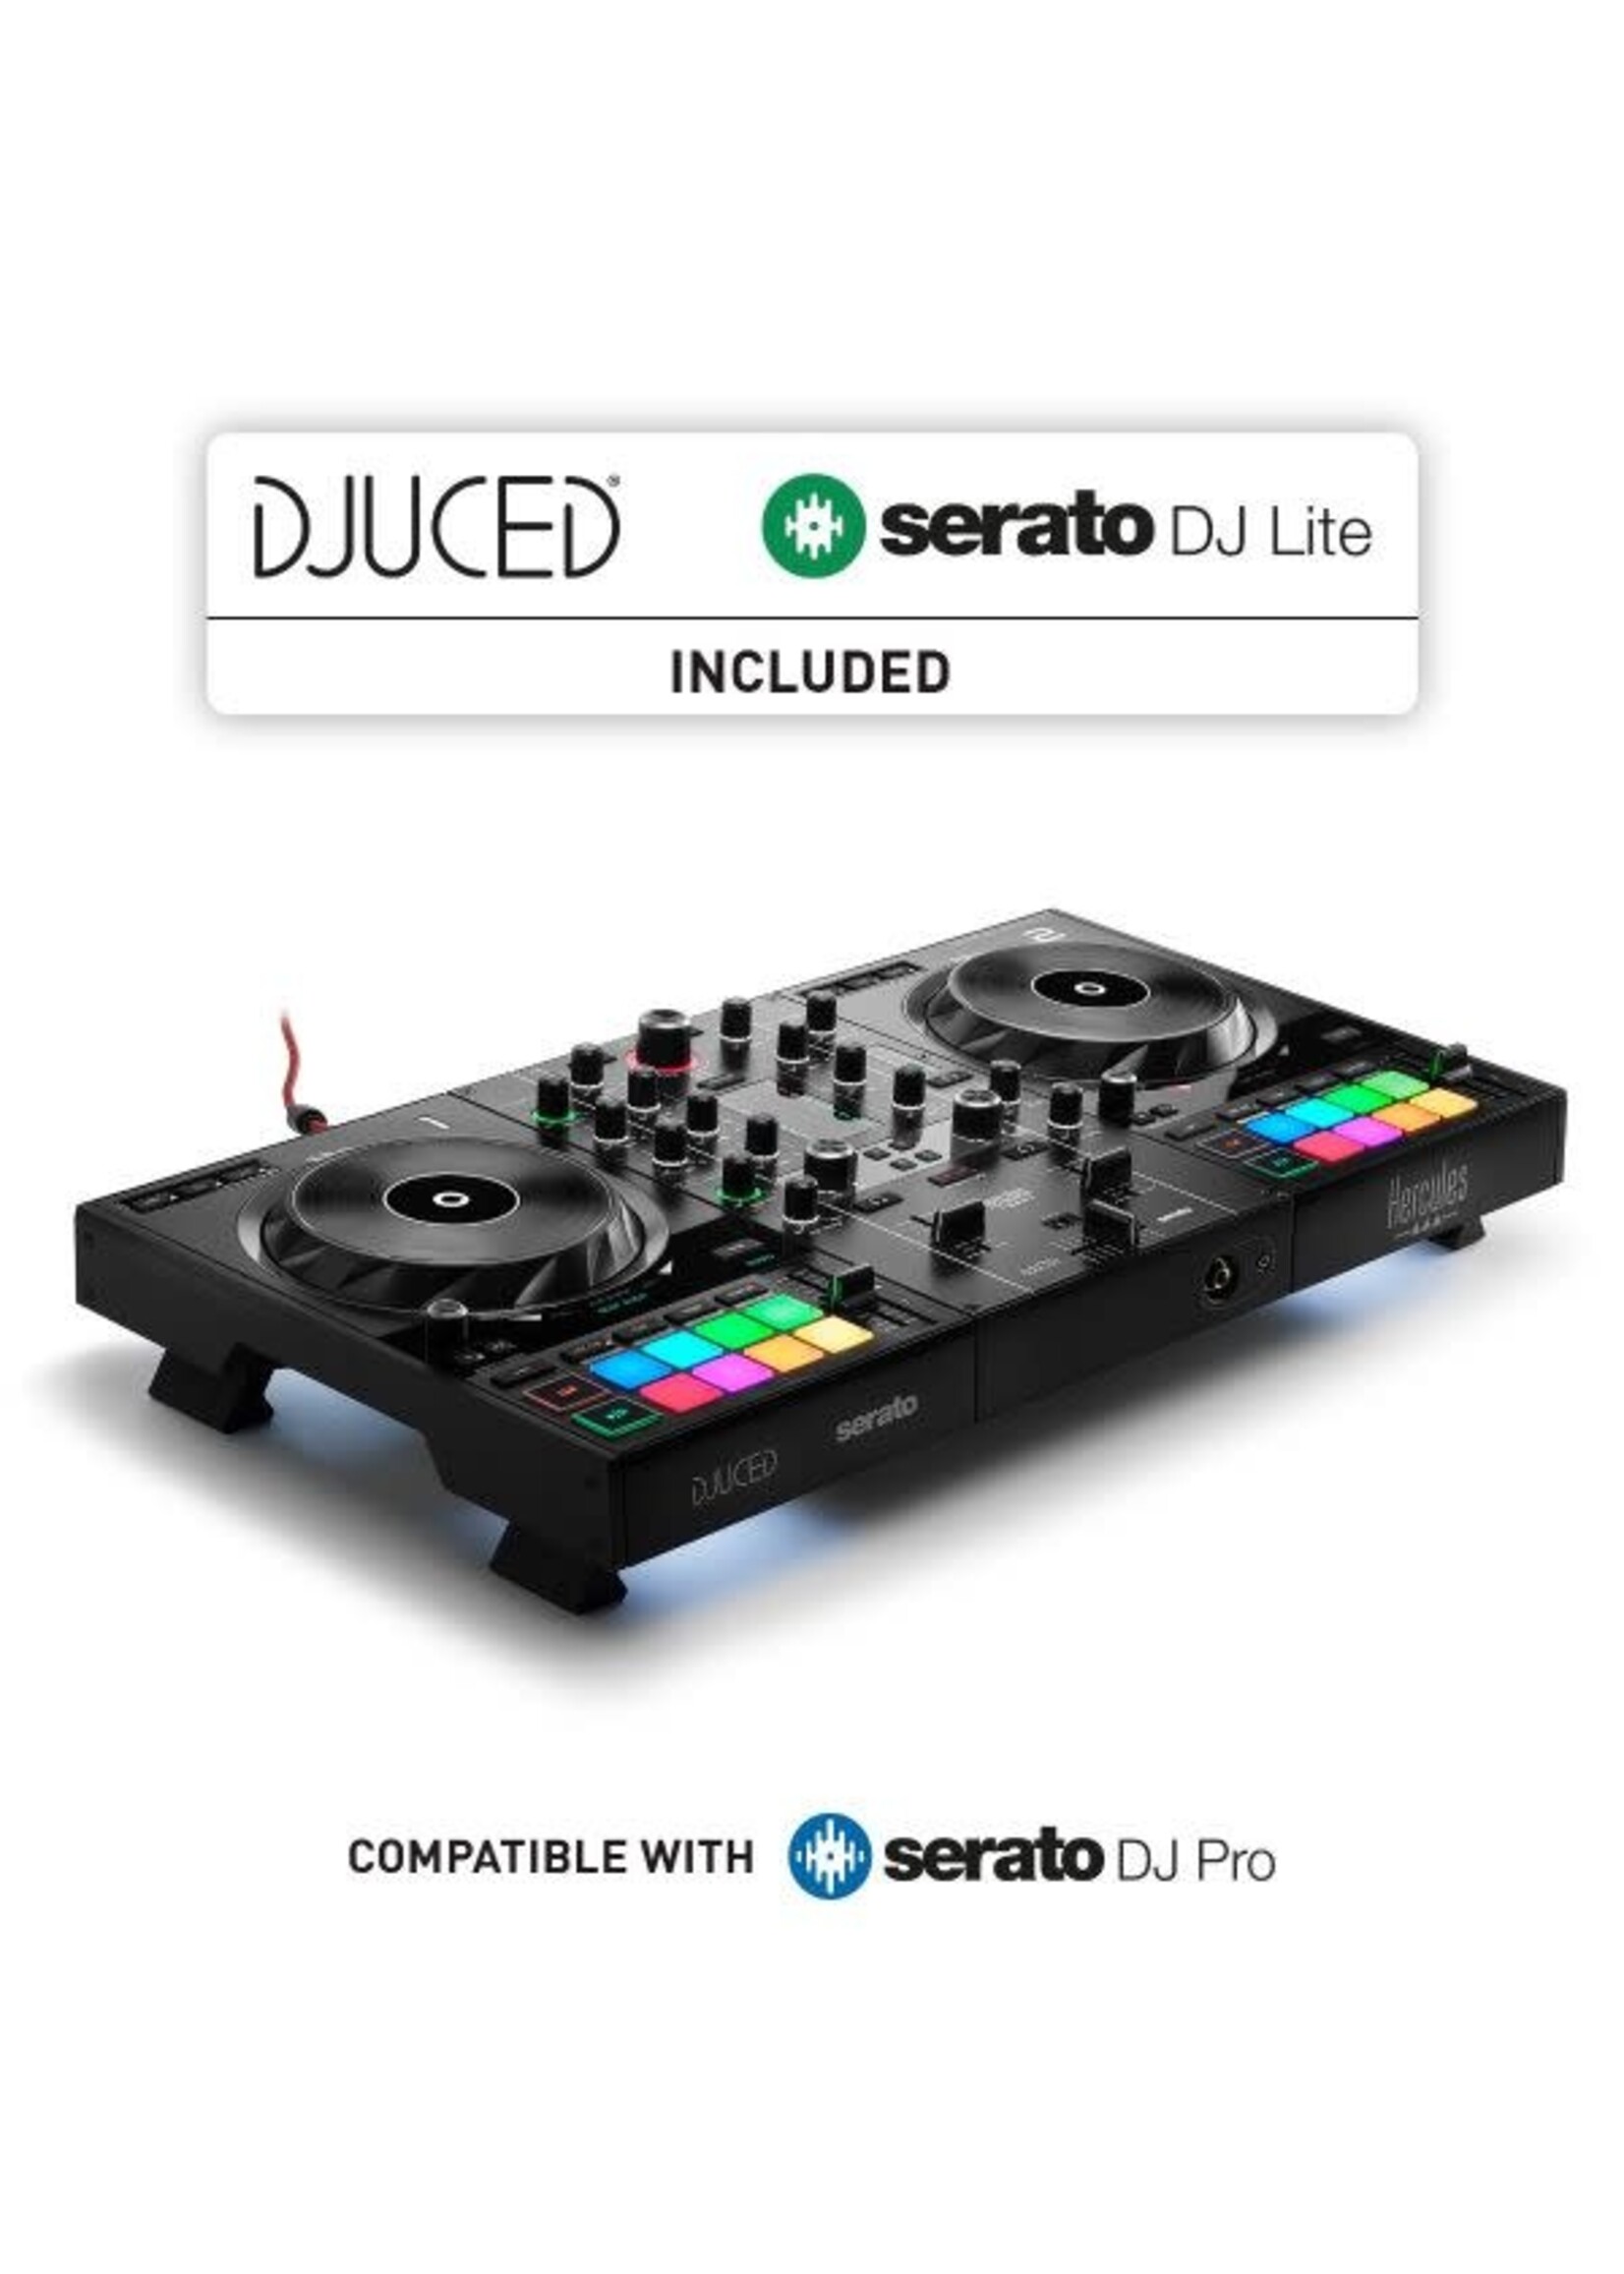 Hercules DJControl Inpulse 500 DJ Controller w/ DJUCED & Serato DJ Lite